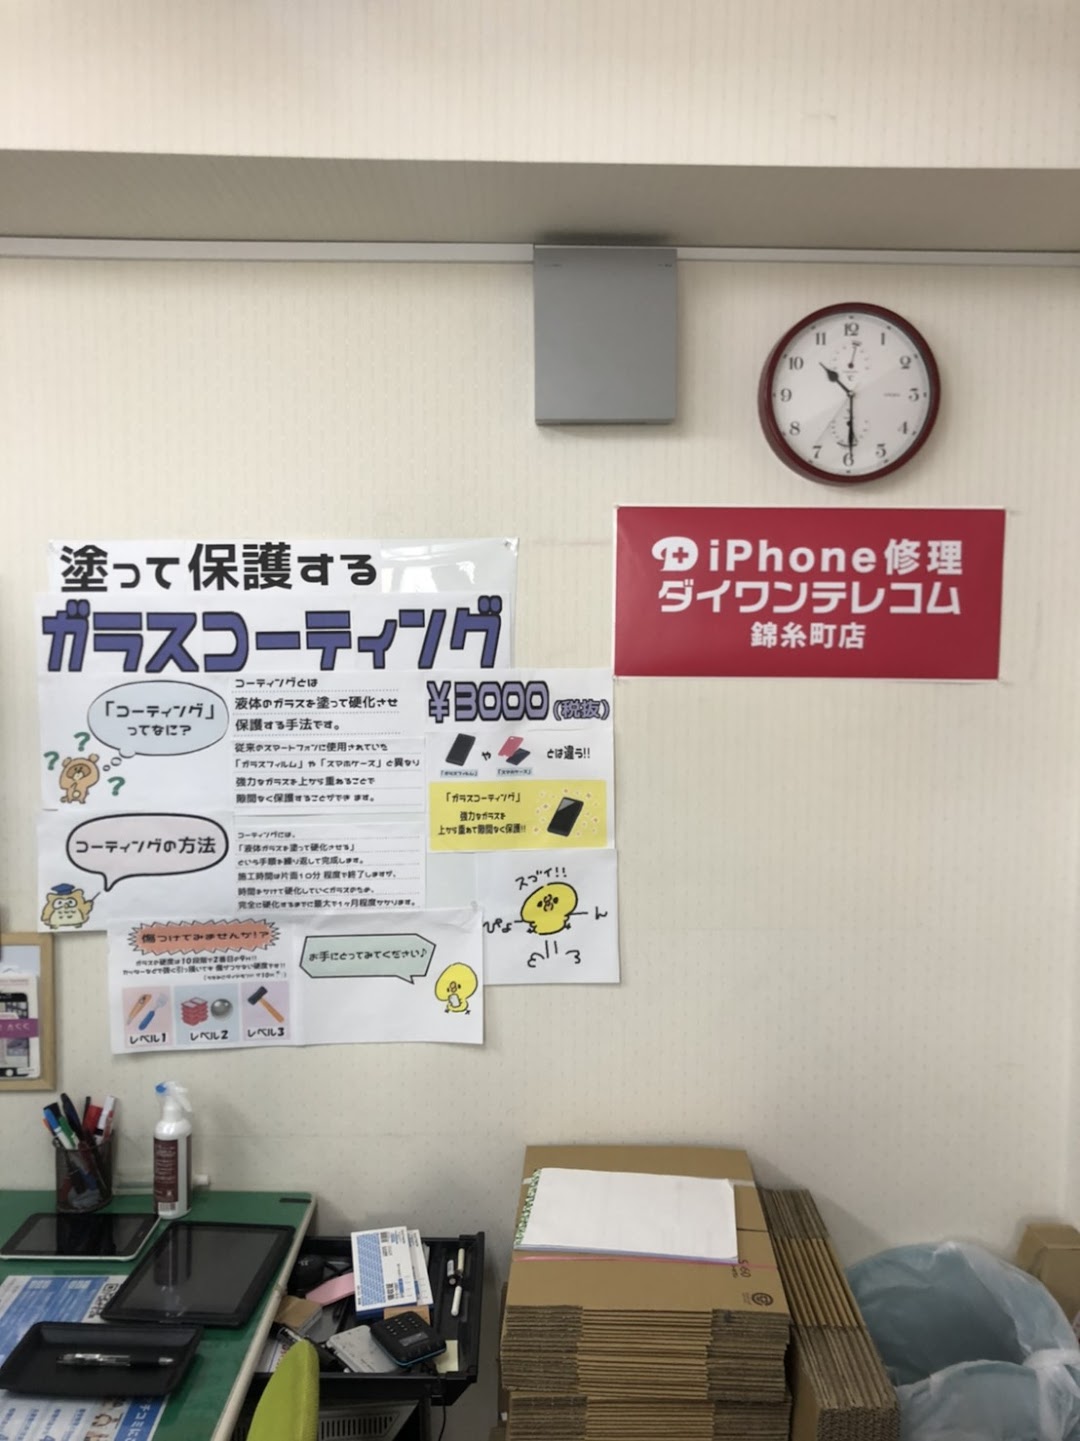 iPhone修理ダイワンテレコム錦糸町店